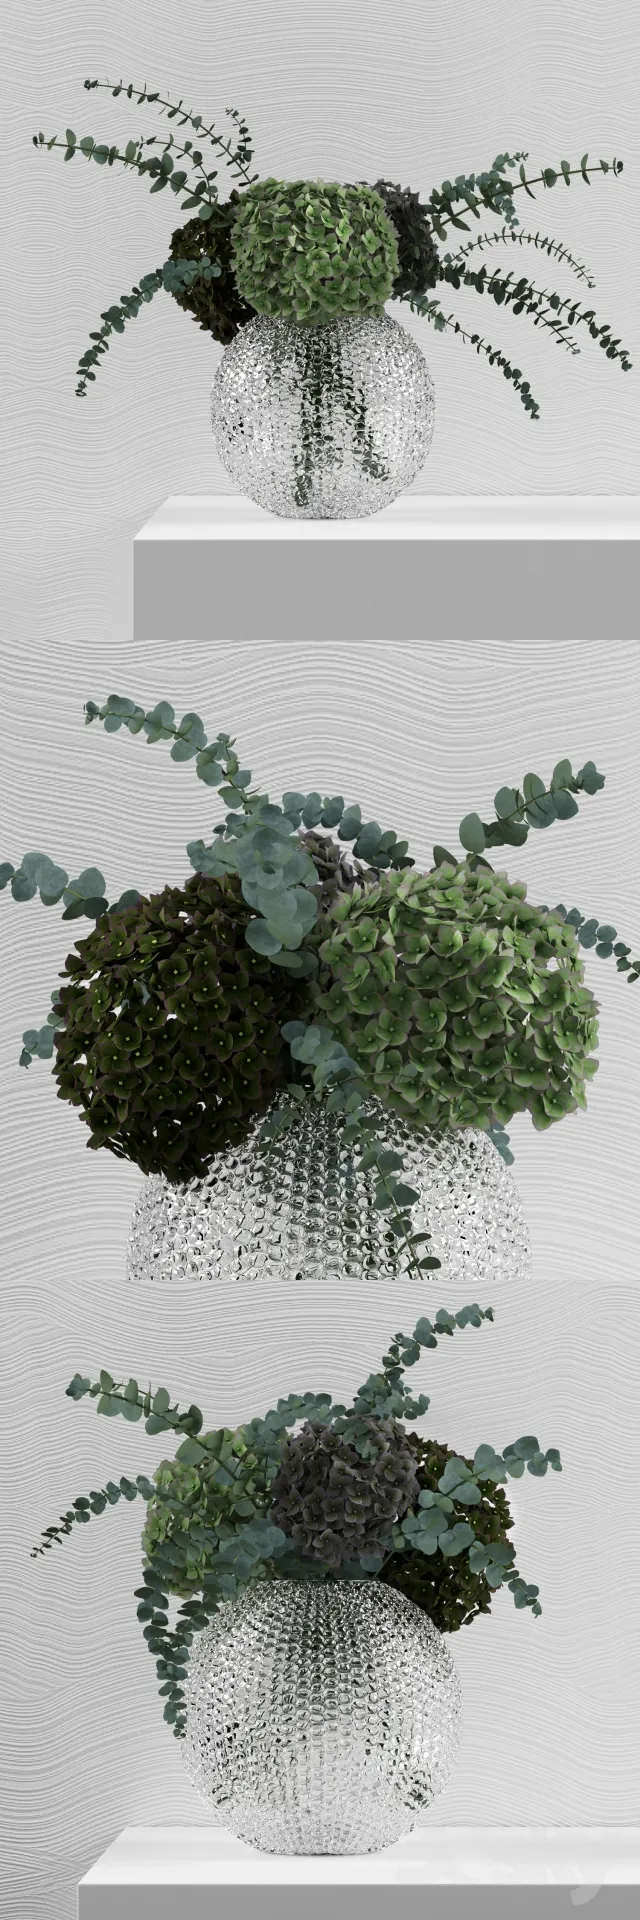 FLOWER – PLANT 3D MODELS – 479